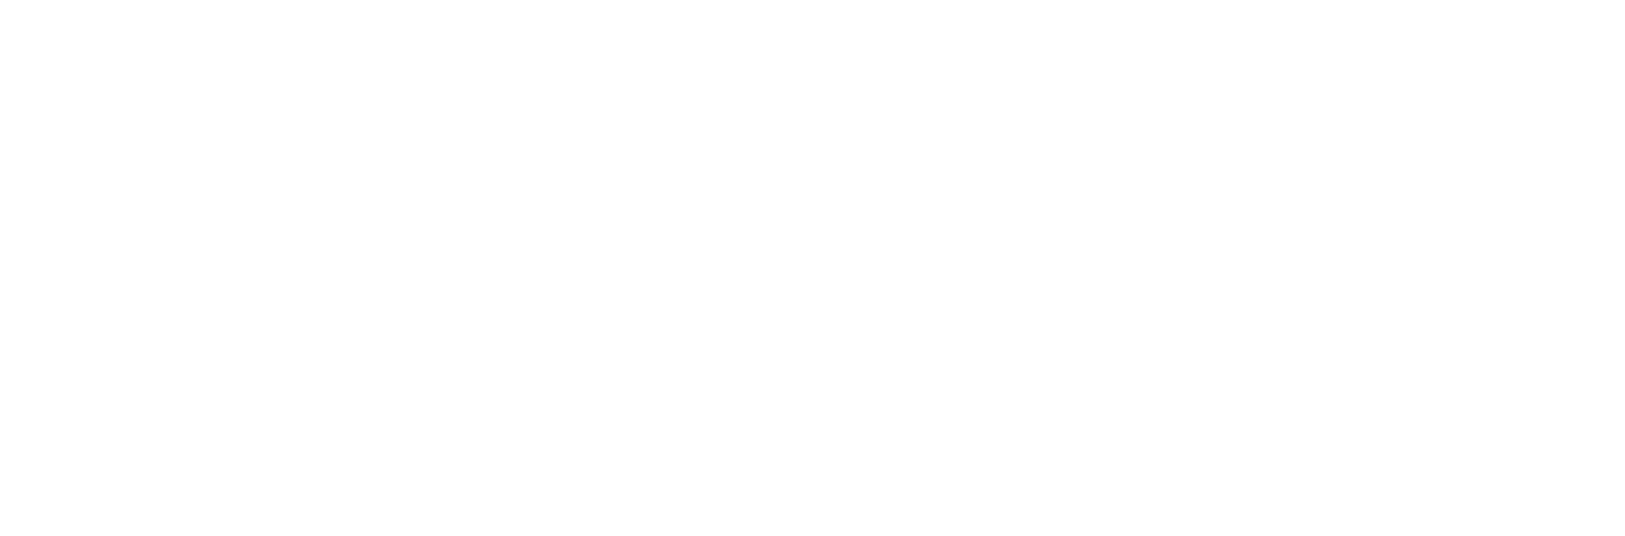 Asia Standard Americas